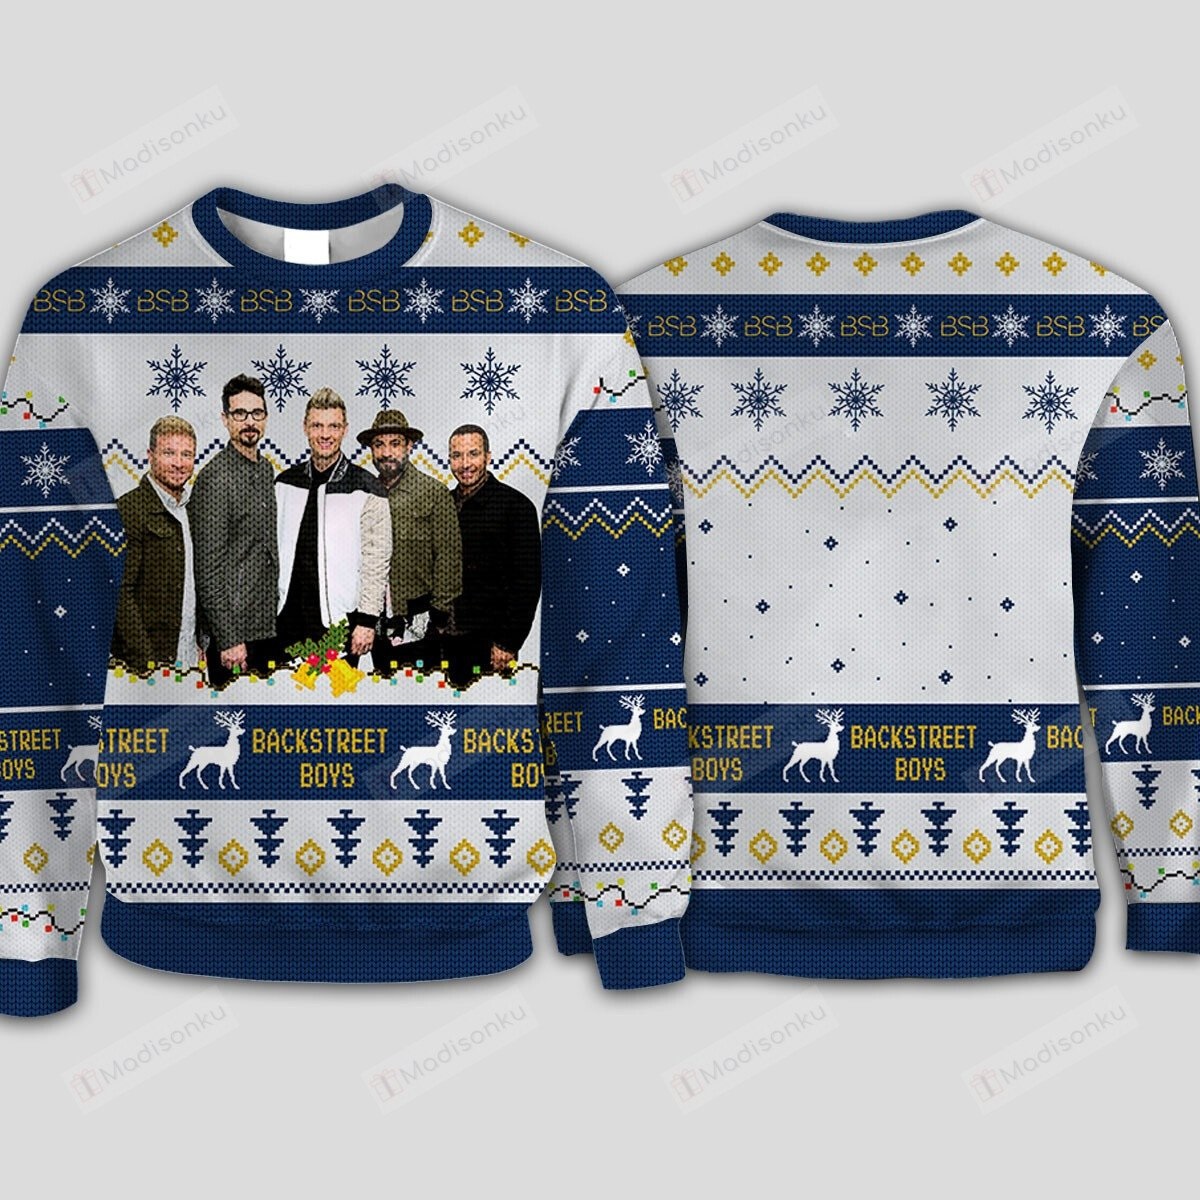 Backstreet Boys ugly christmas sweater